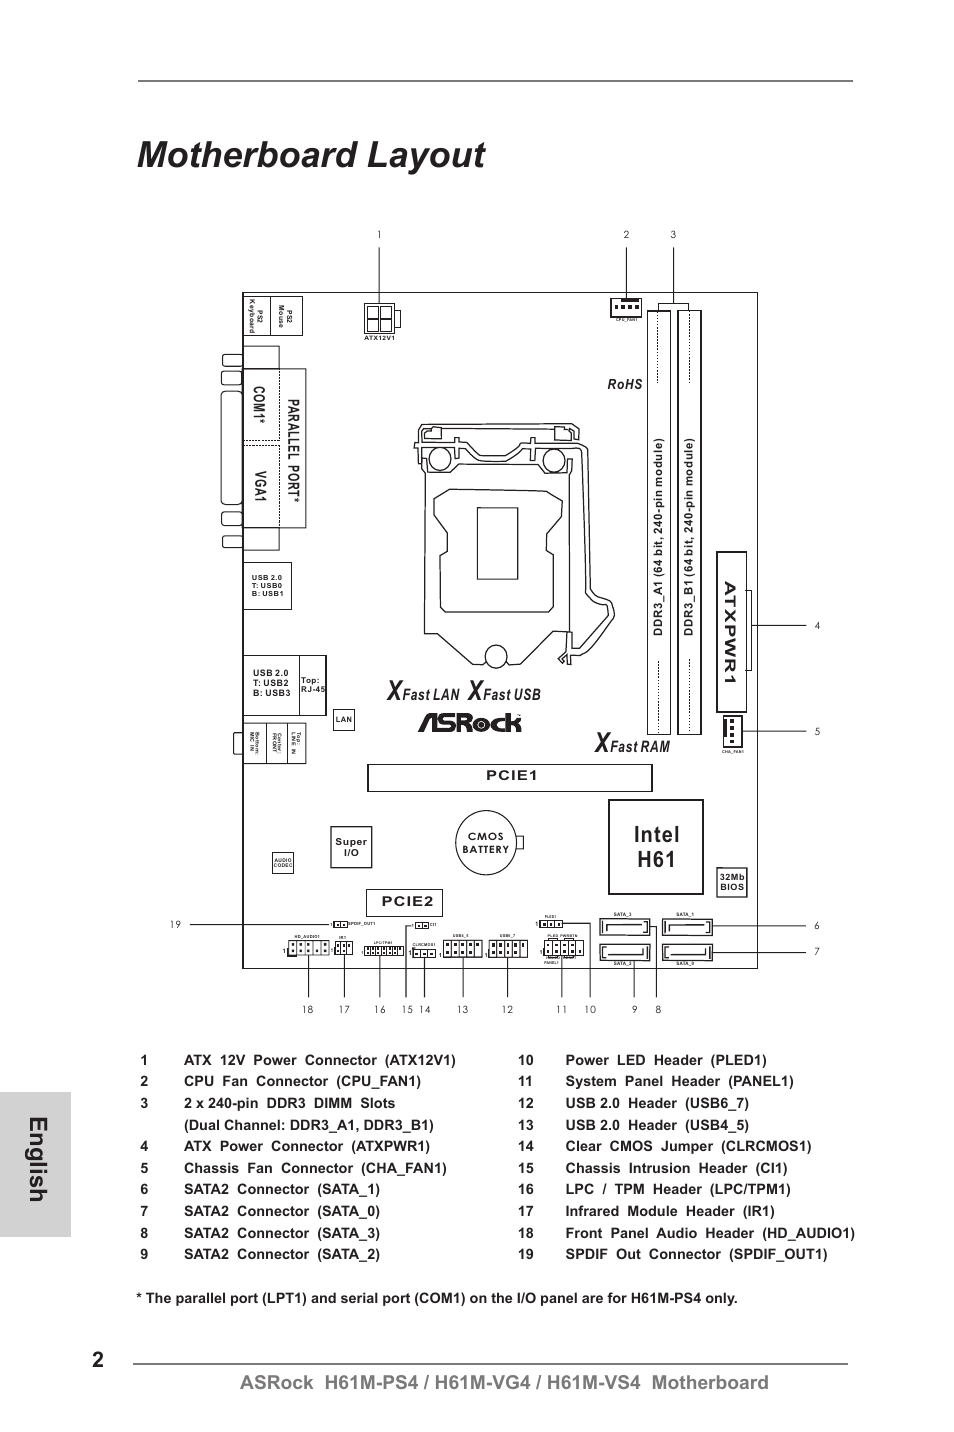 Motherboard layout, English, Intel h61 | User Manual | Page 2 / 52